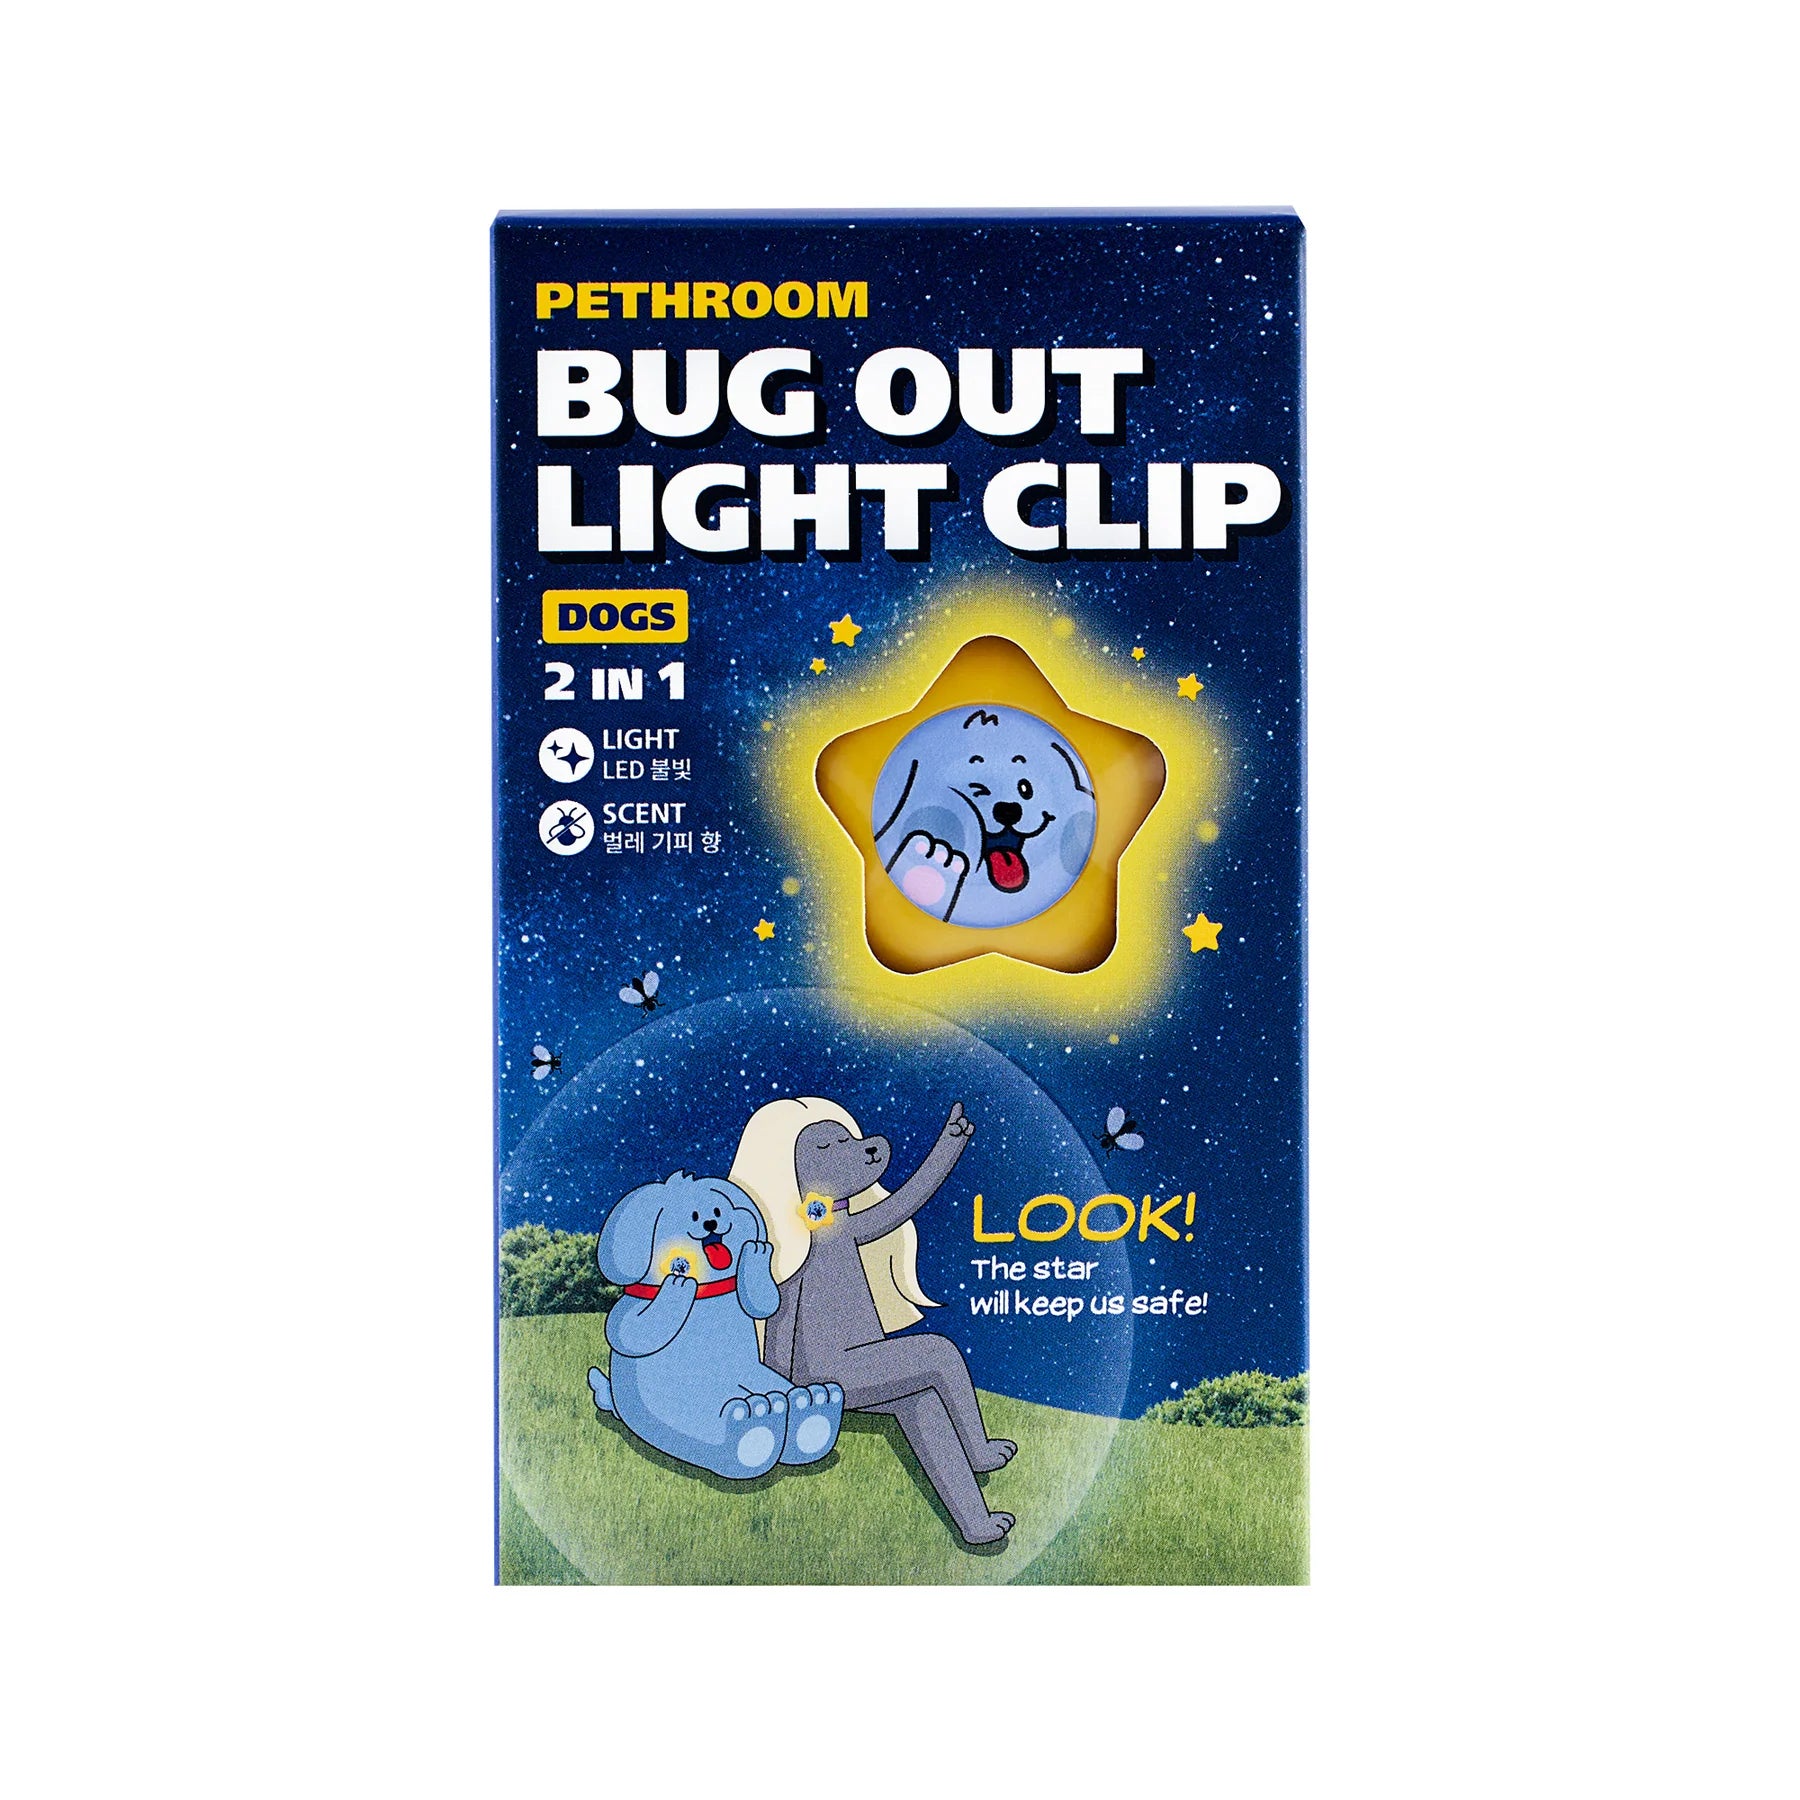 Pethroom Bug Out Light Clip